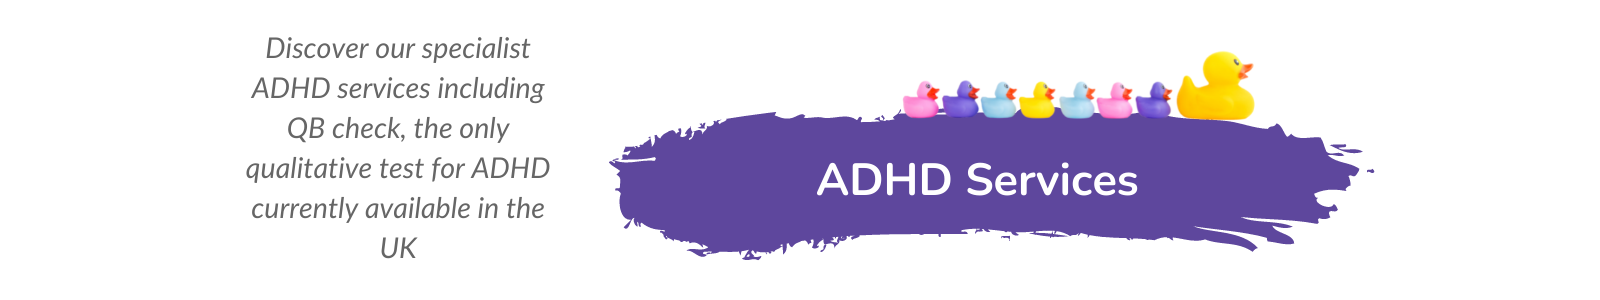 ADHD Service at ADD-vance